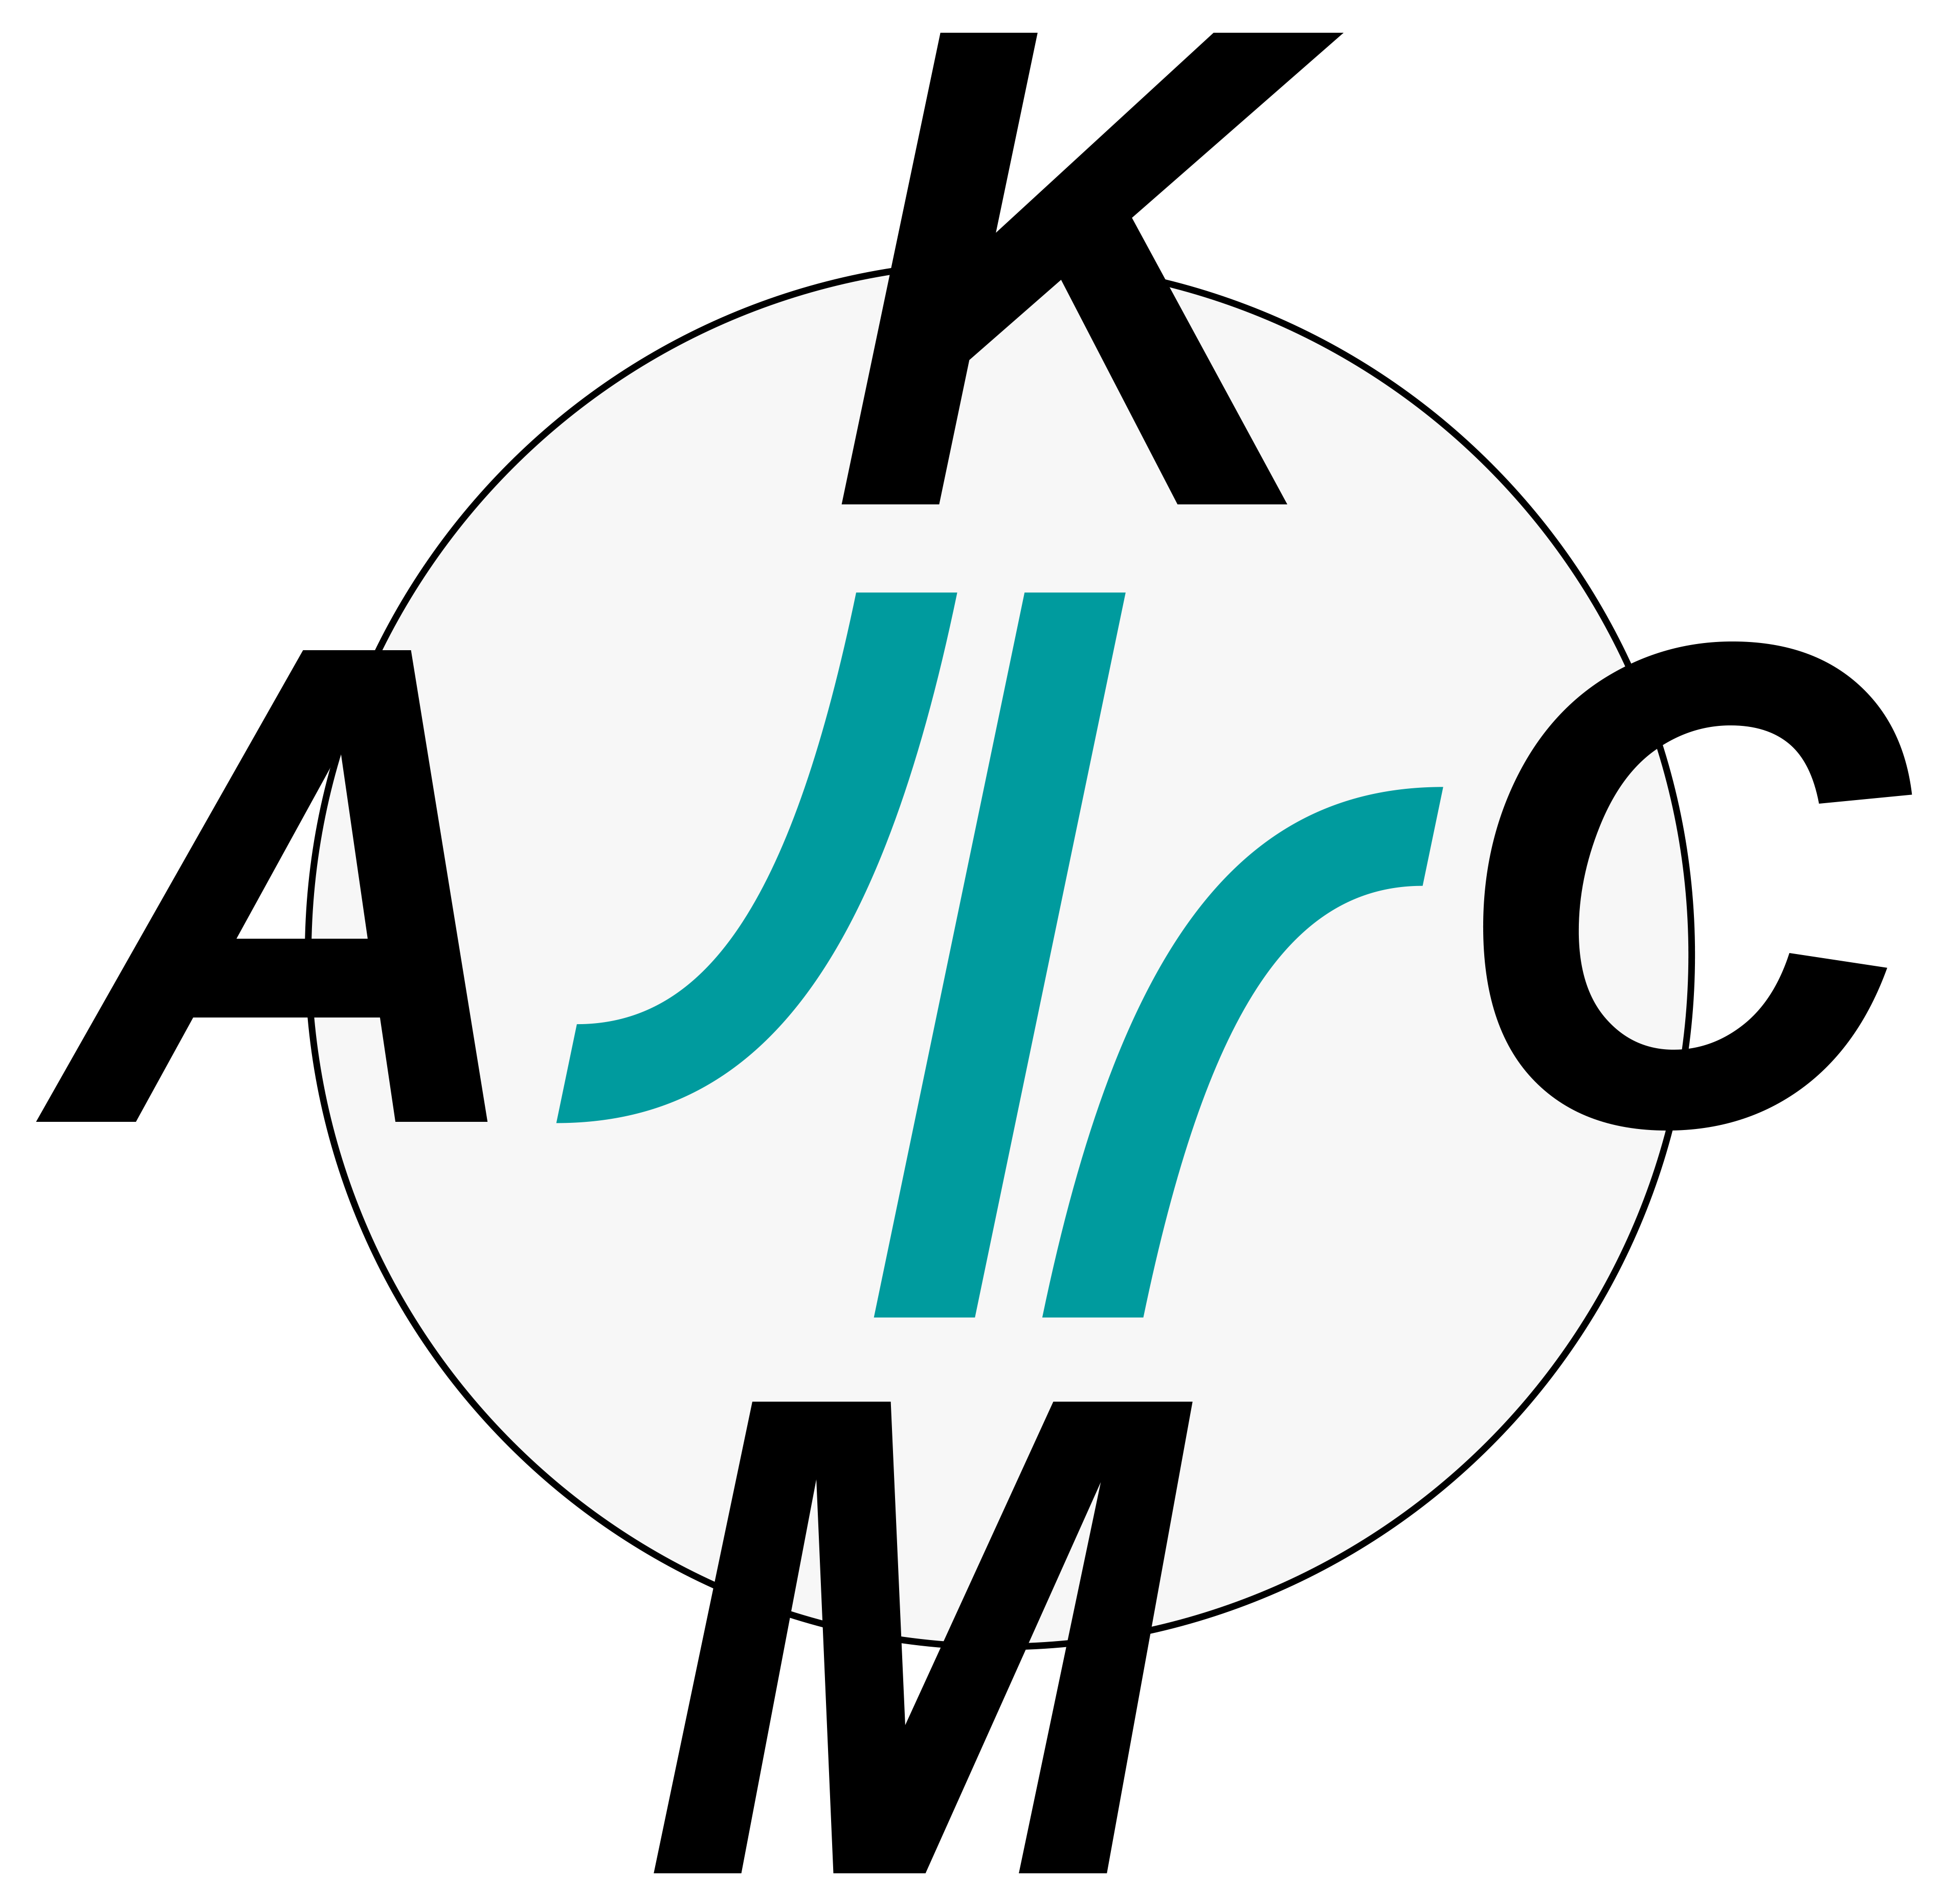 The logo of AKMC